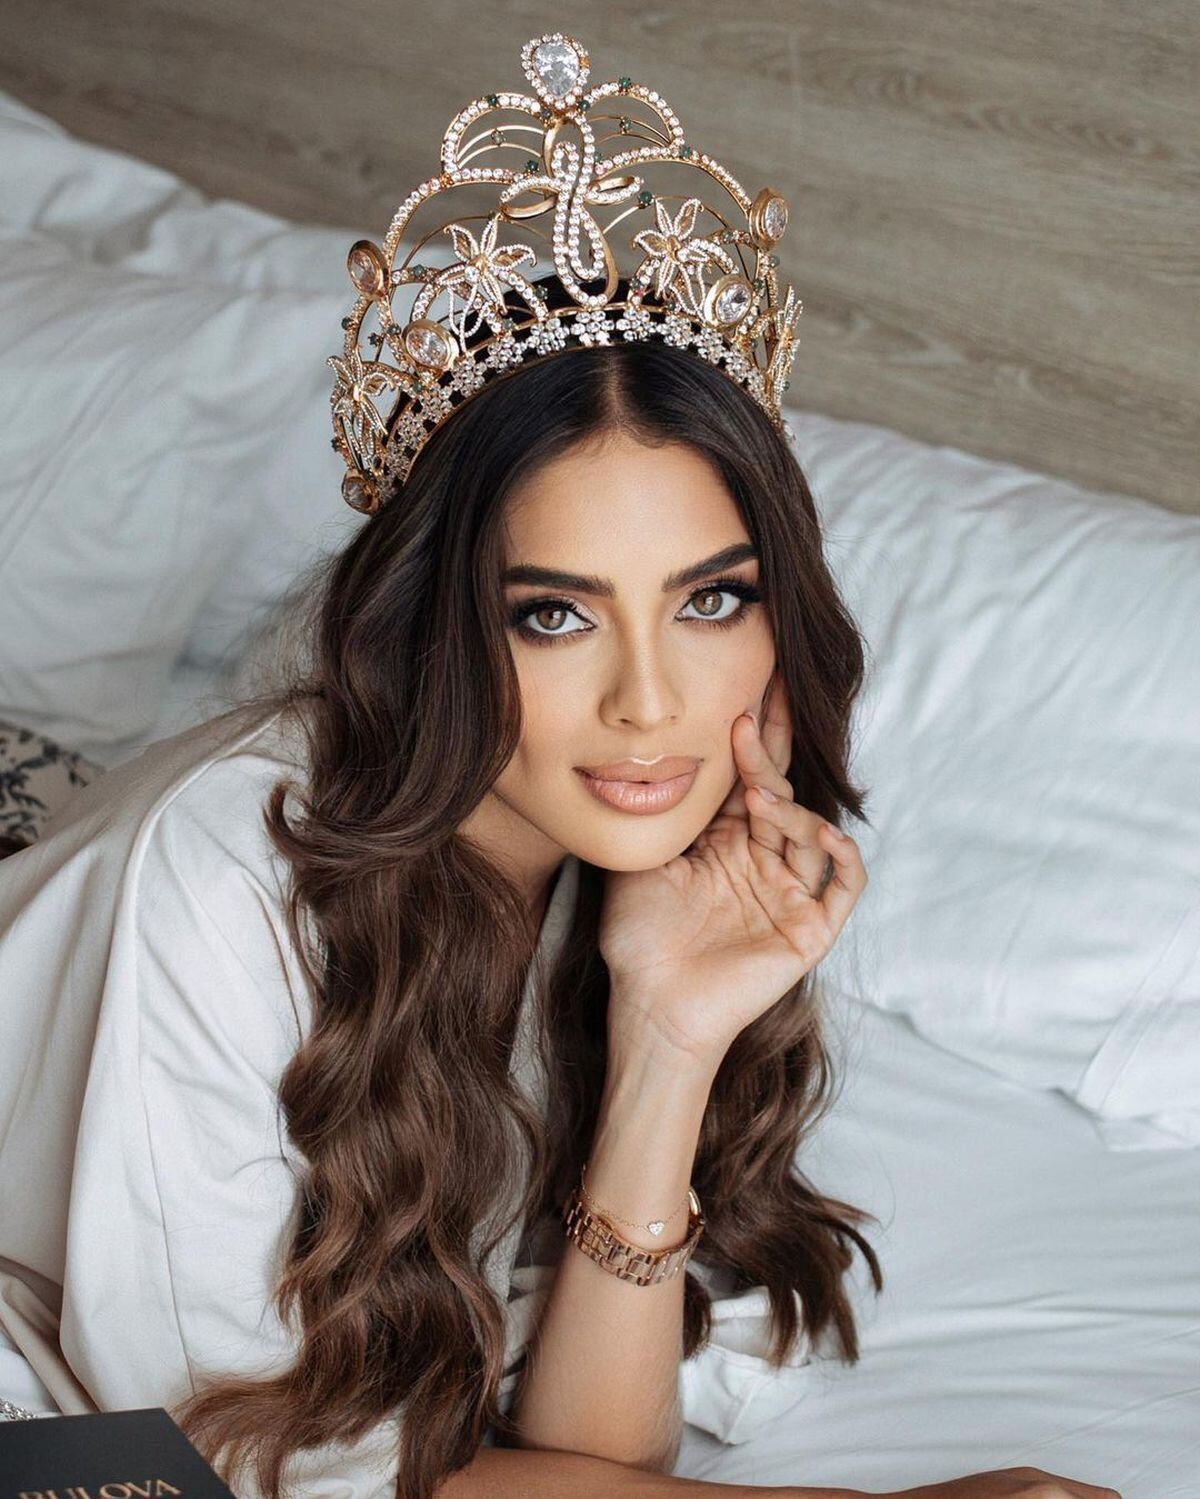 Camila Avella luciendo su corona como representante del país cafetero (Foto: Miss Colombia / Instagram)